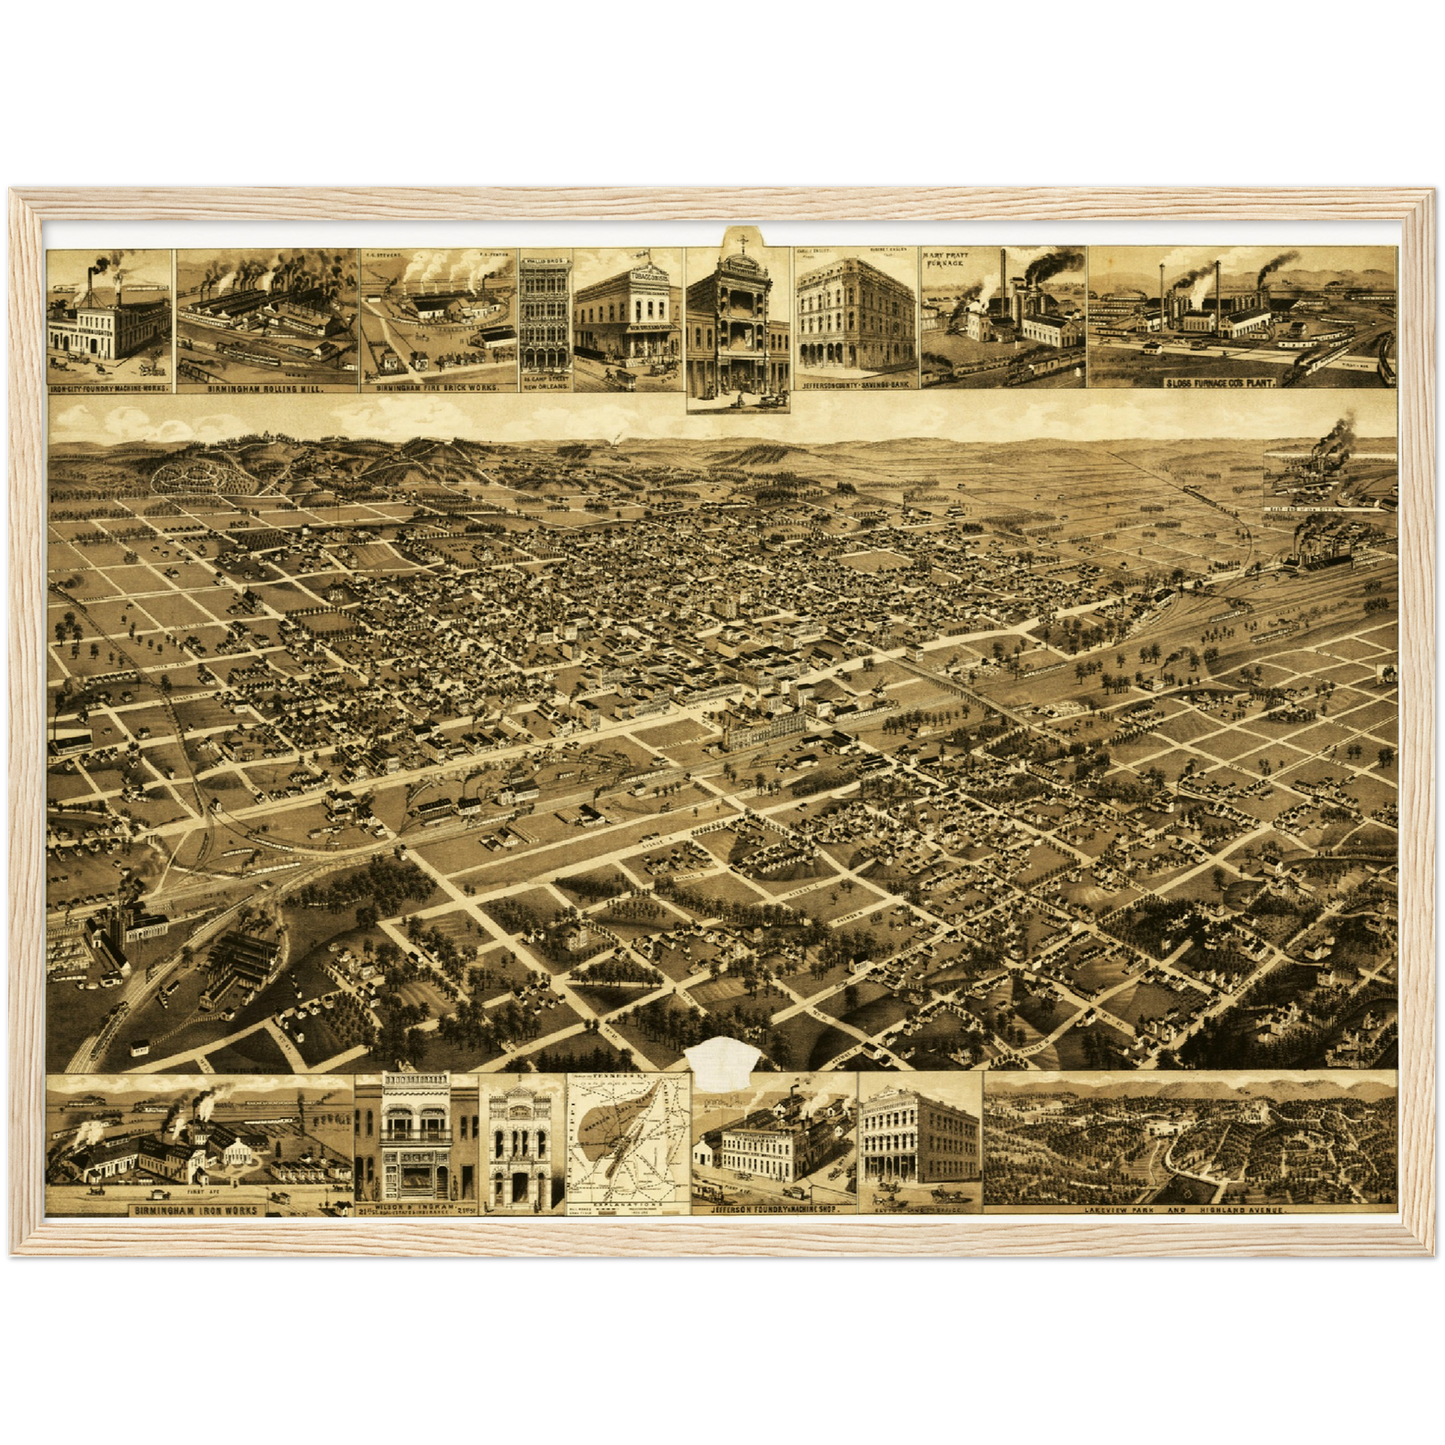 Historical city map  Test product horizontal 3 sizes